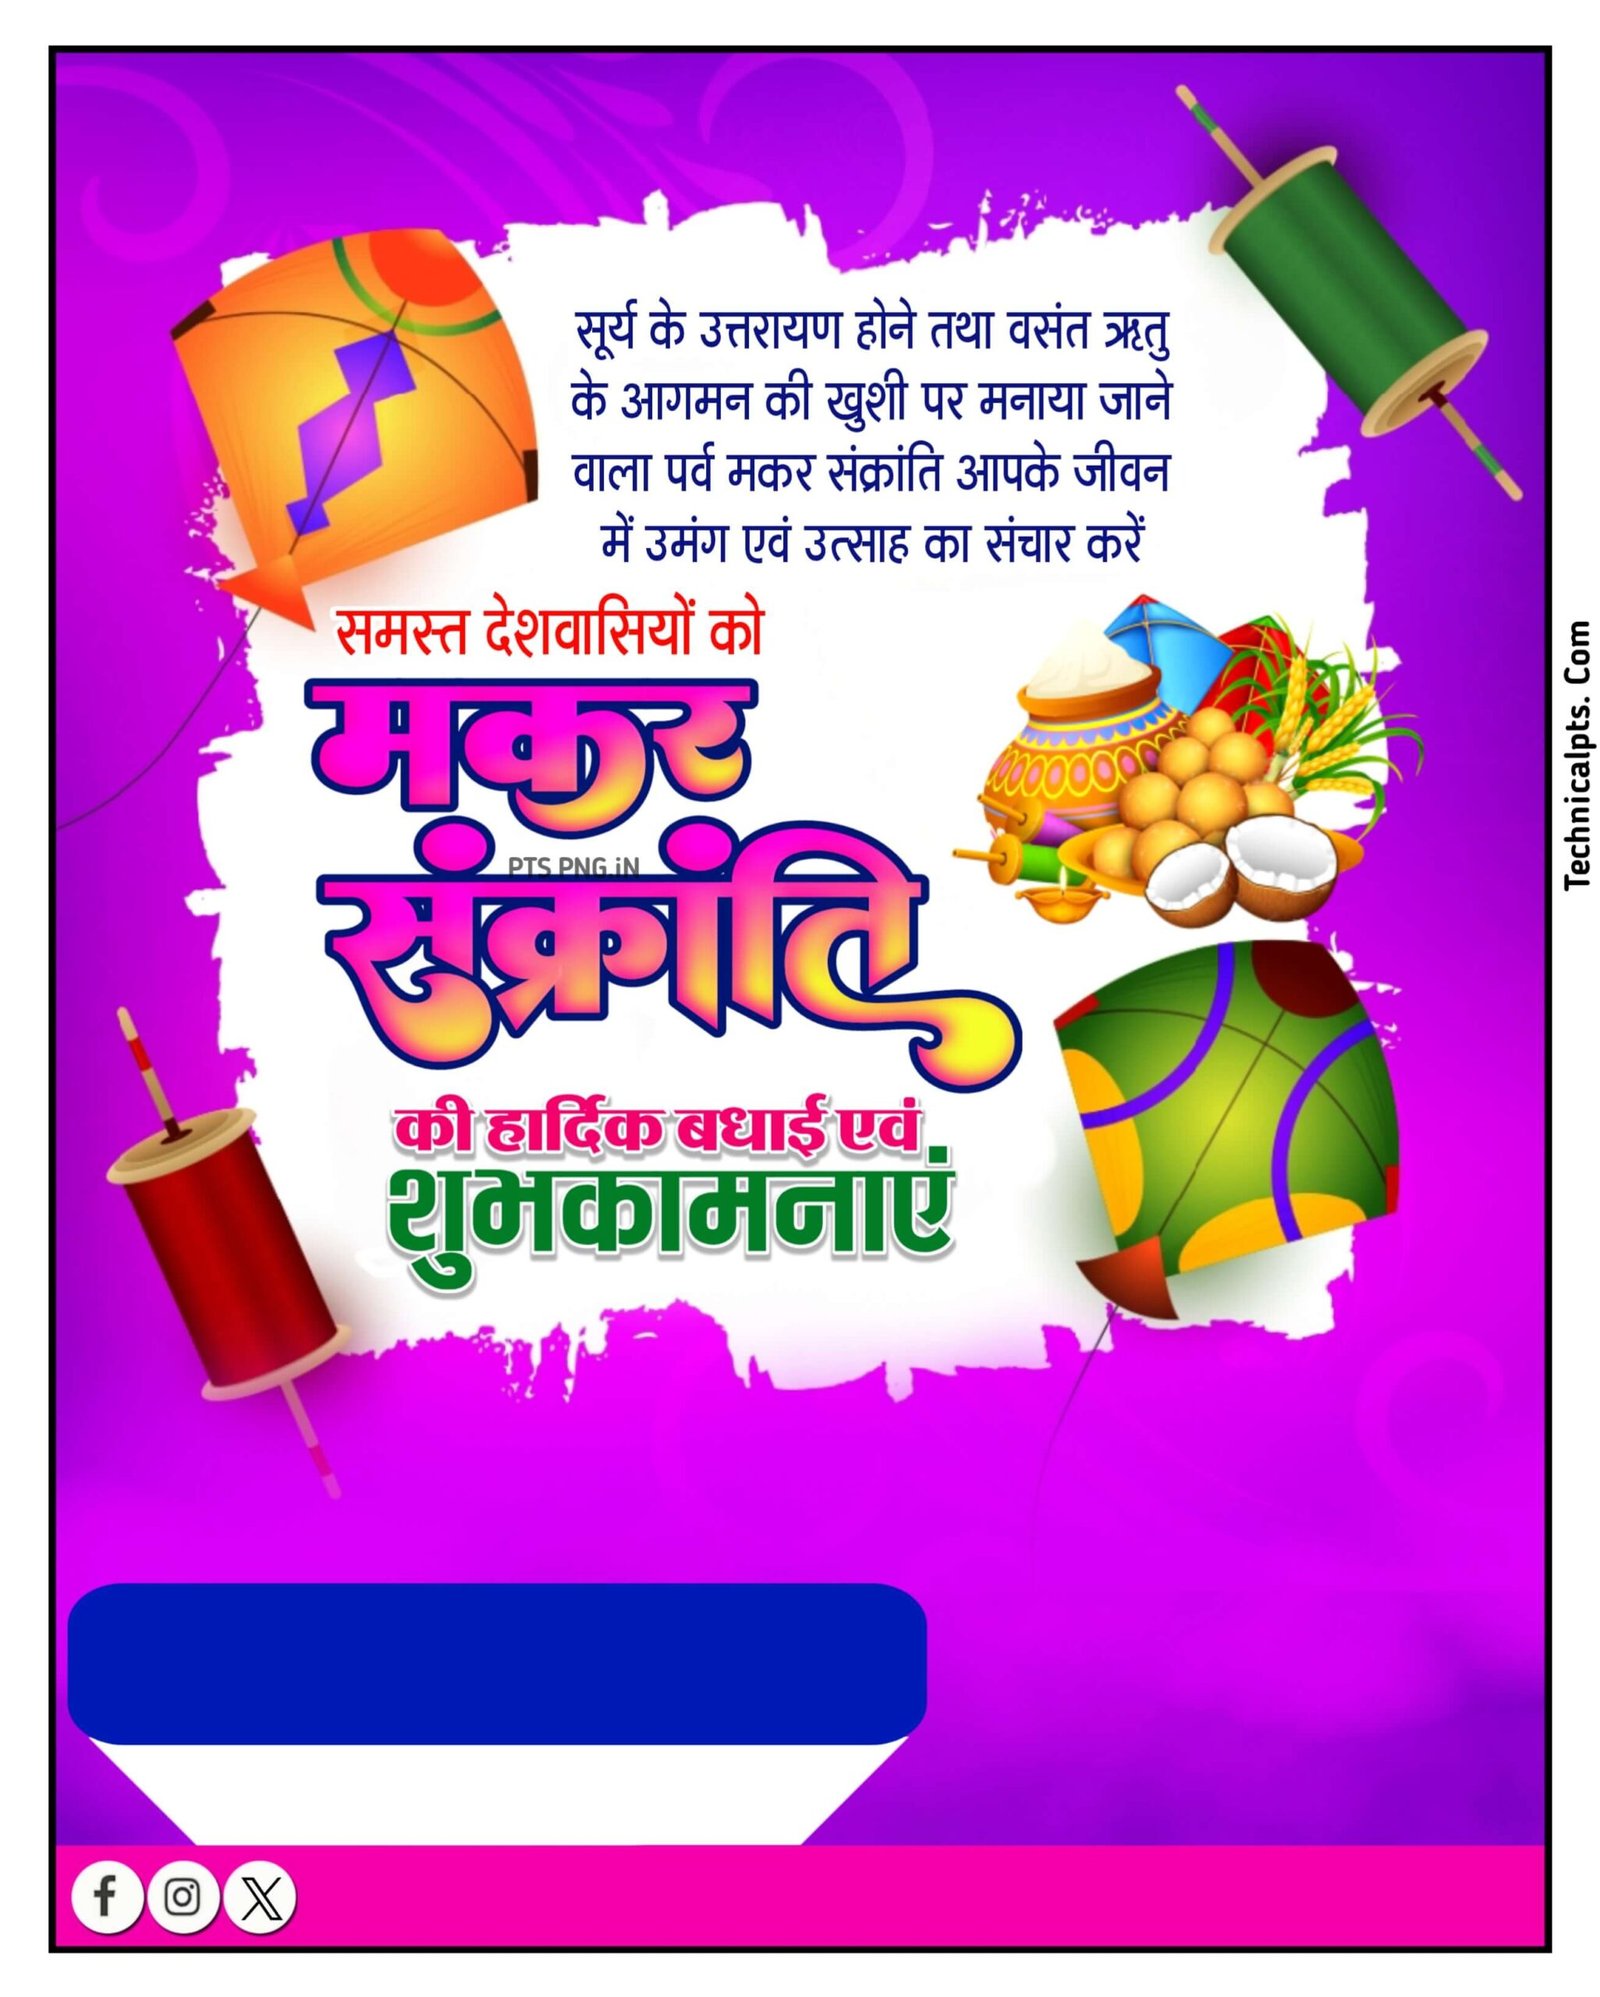 Makar Sankranti ka poster mobile se banana sikhen| Happy Makar Sakranti banner editing in mobile| Makar Sankranti PNG image download